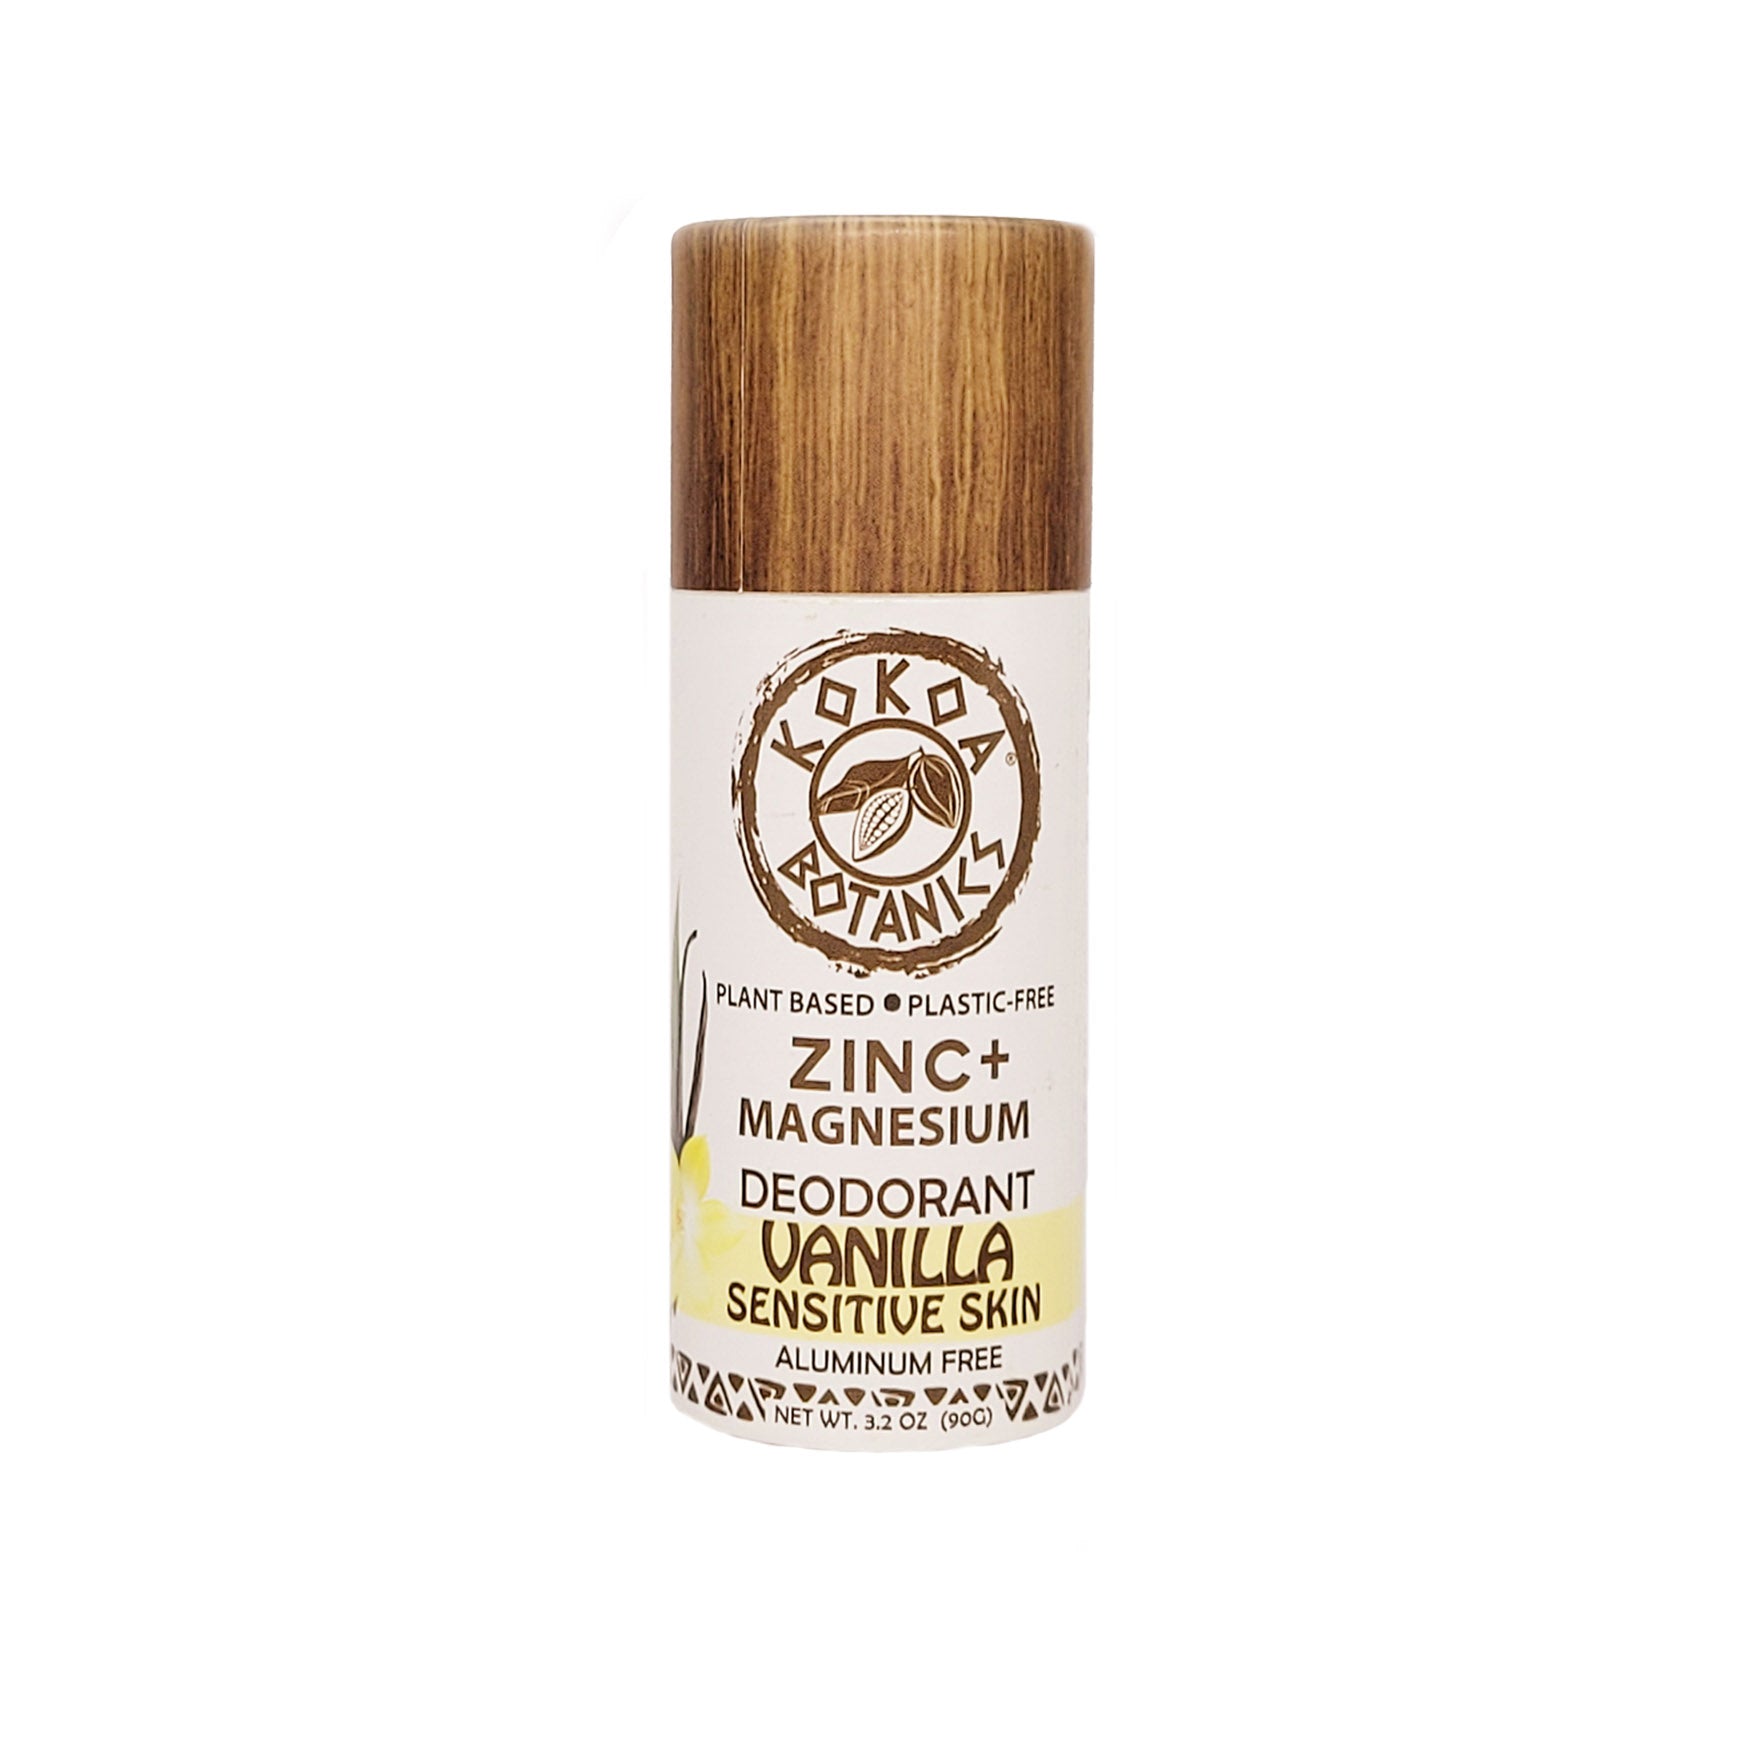 Vanilla - Magnesium and Zinc Natural Deodorant - Sensitive Skin - Baking Soda Free 3.2 oz